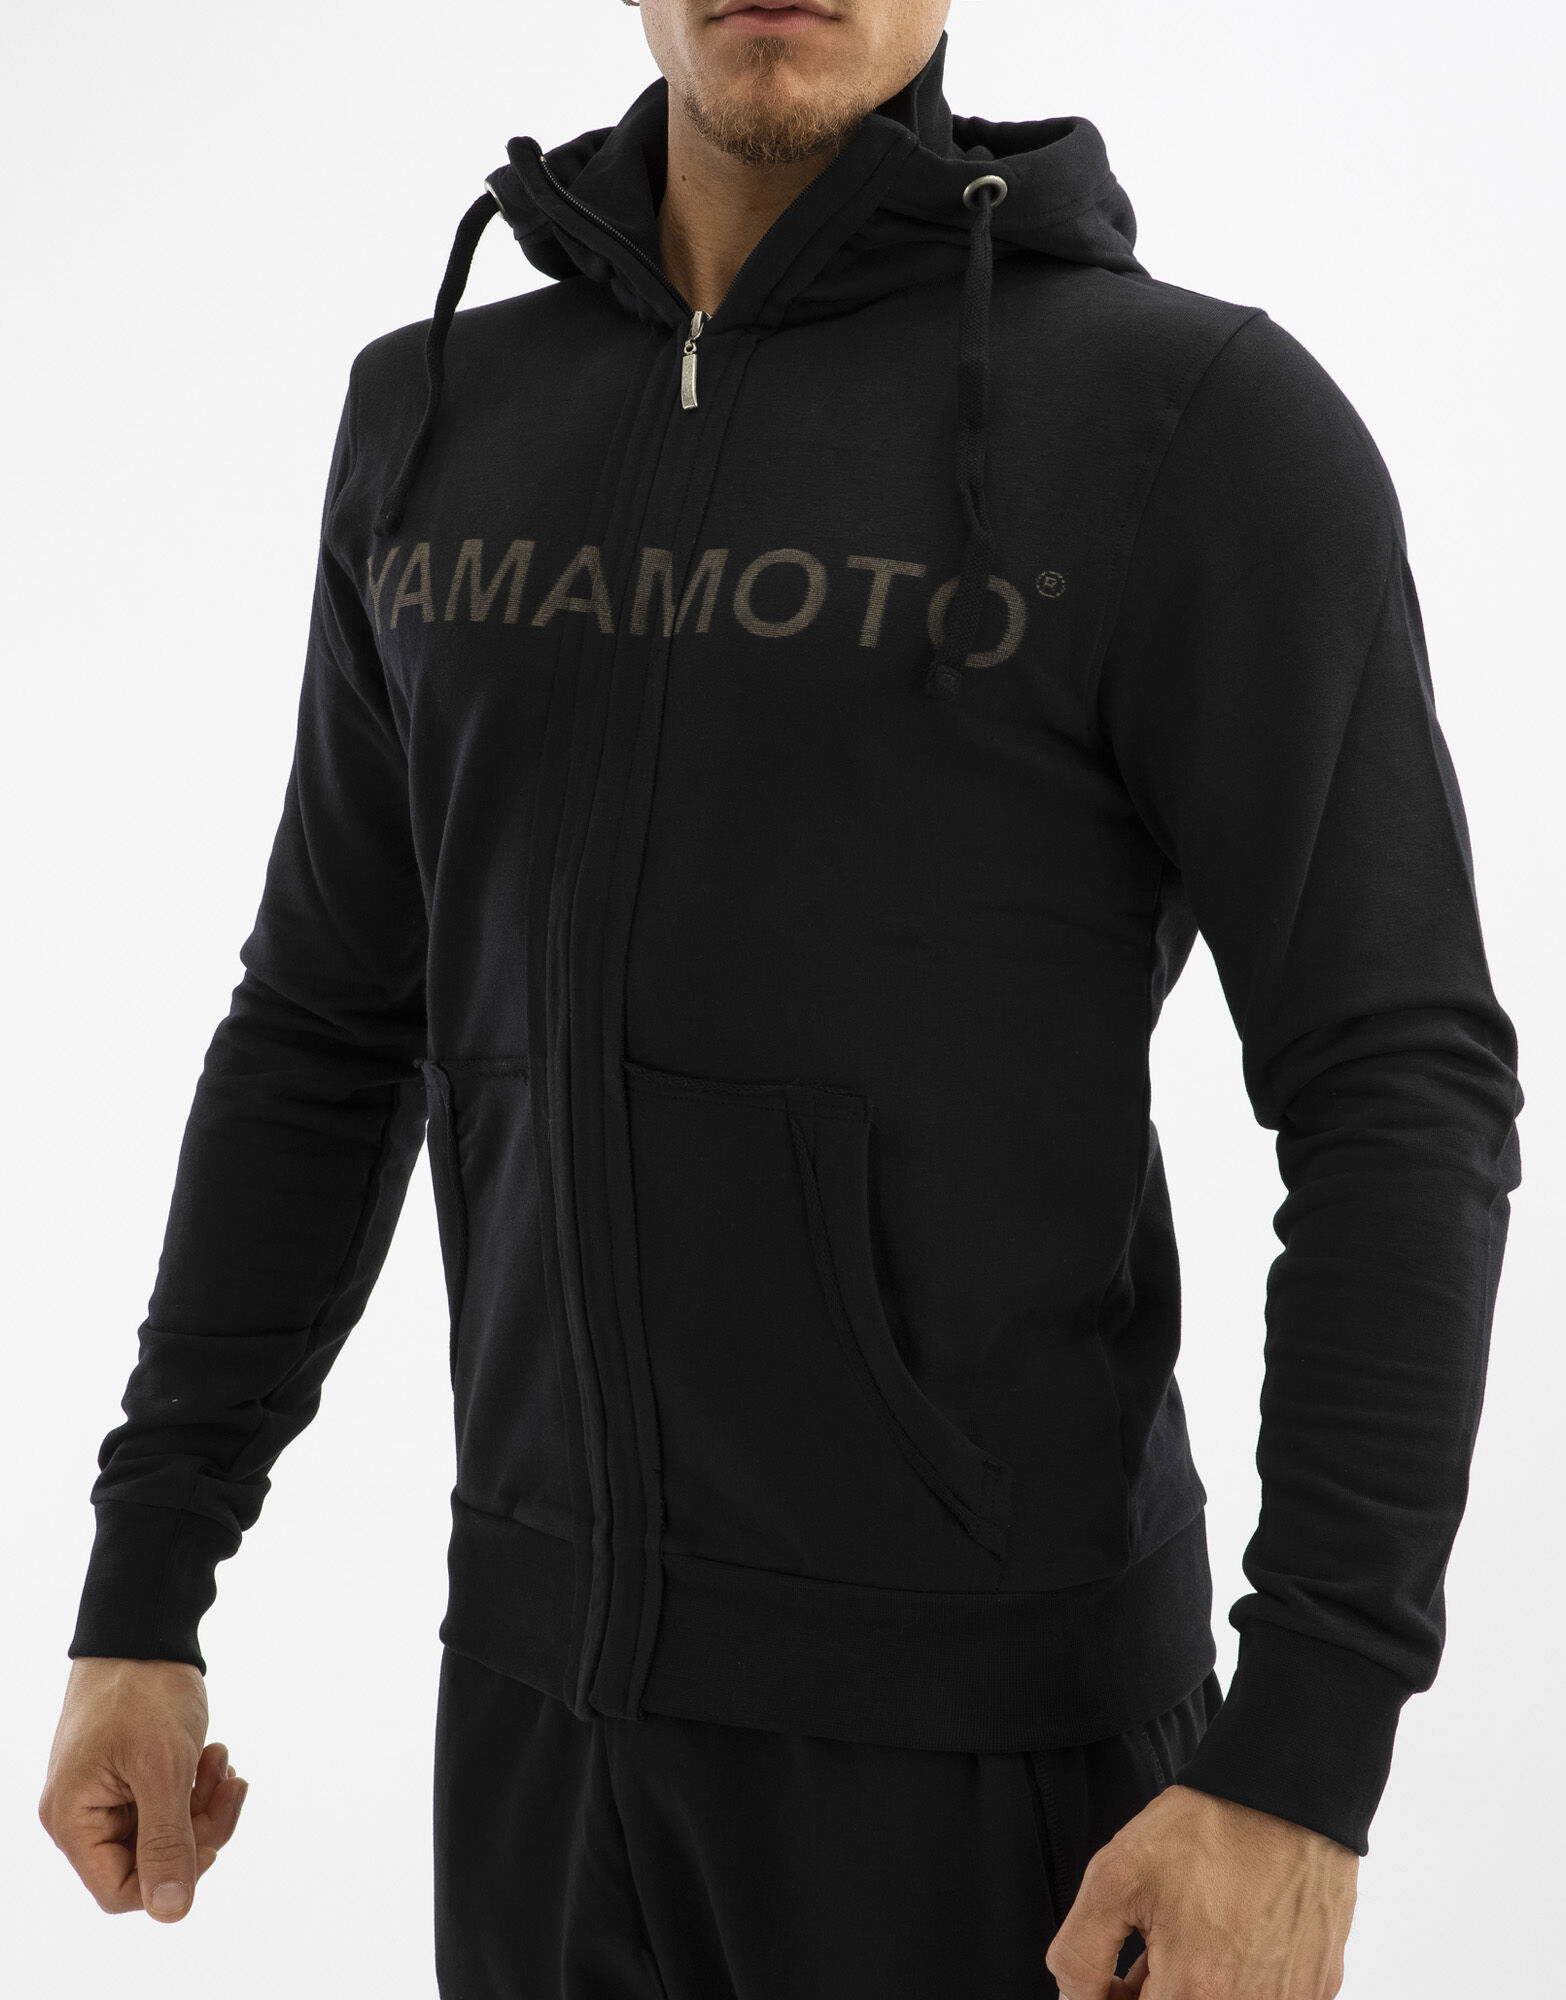 YAMAMOTO OUTFIT Sweatshirt Zip Nero M